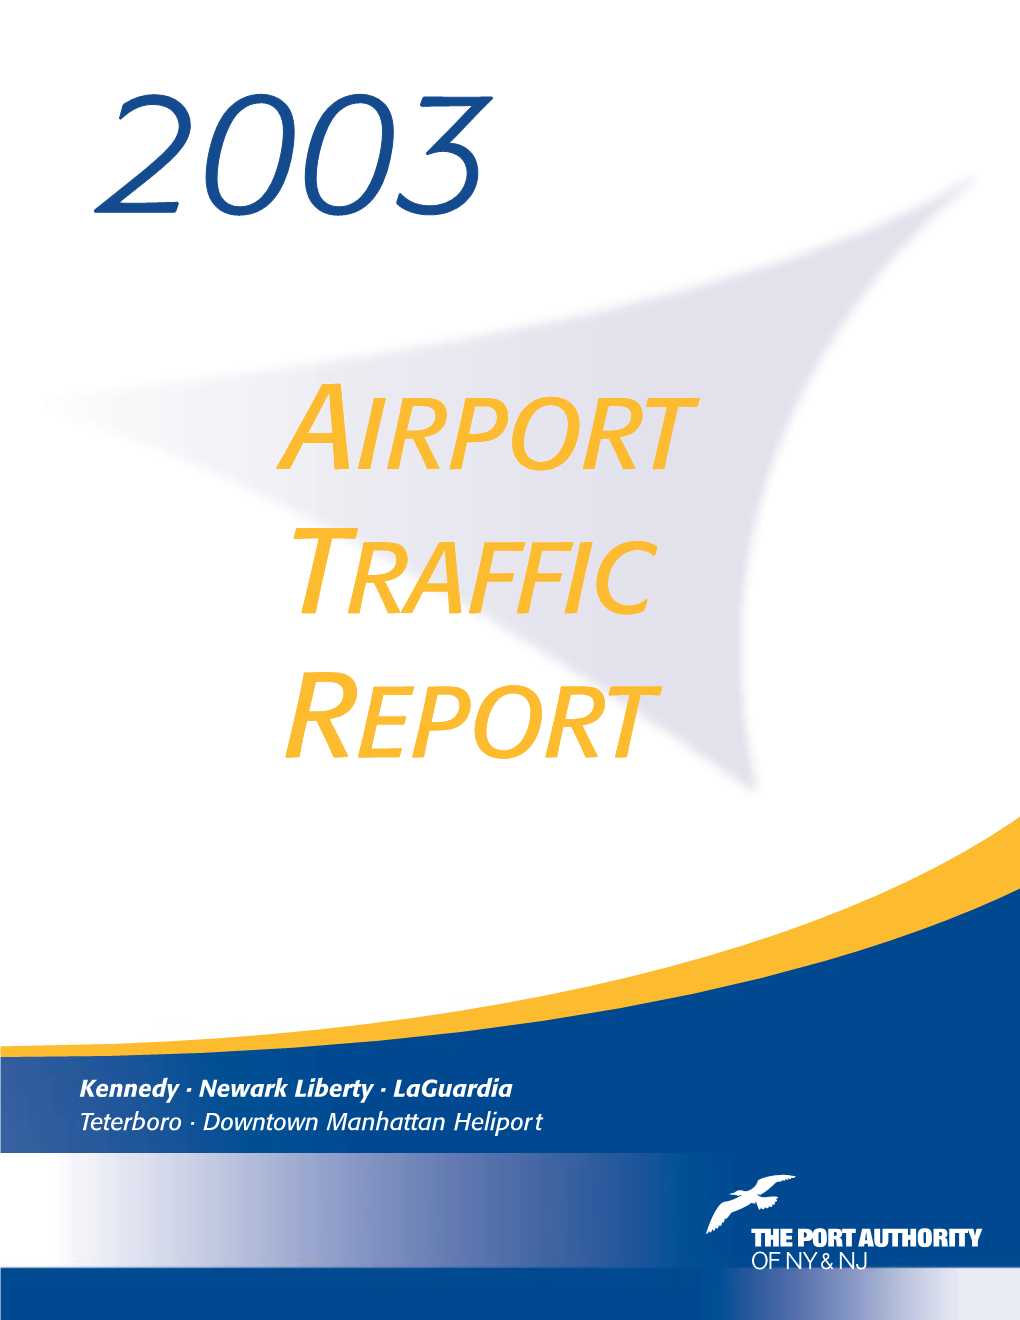 2003 Annual Airport Traffic Report